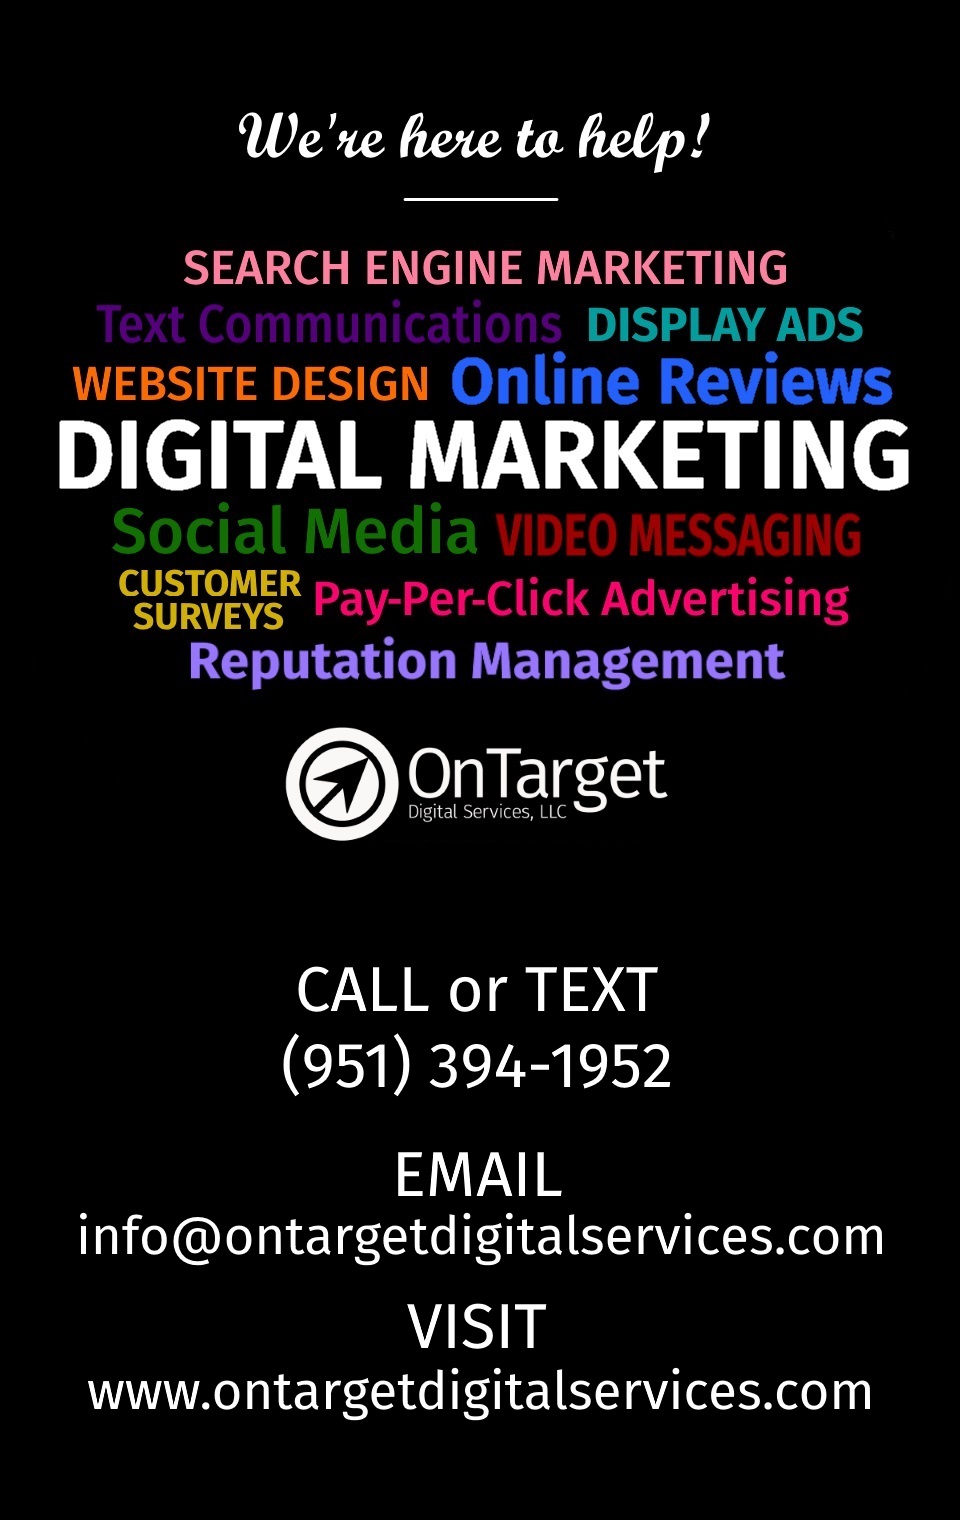 OnTarget Digital Marketing Solutions